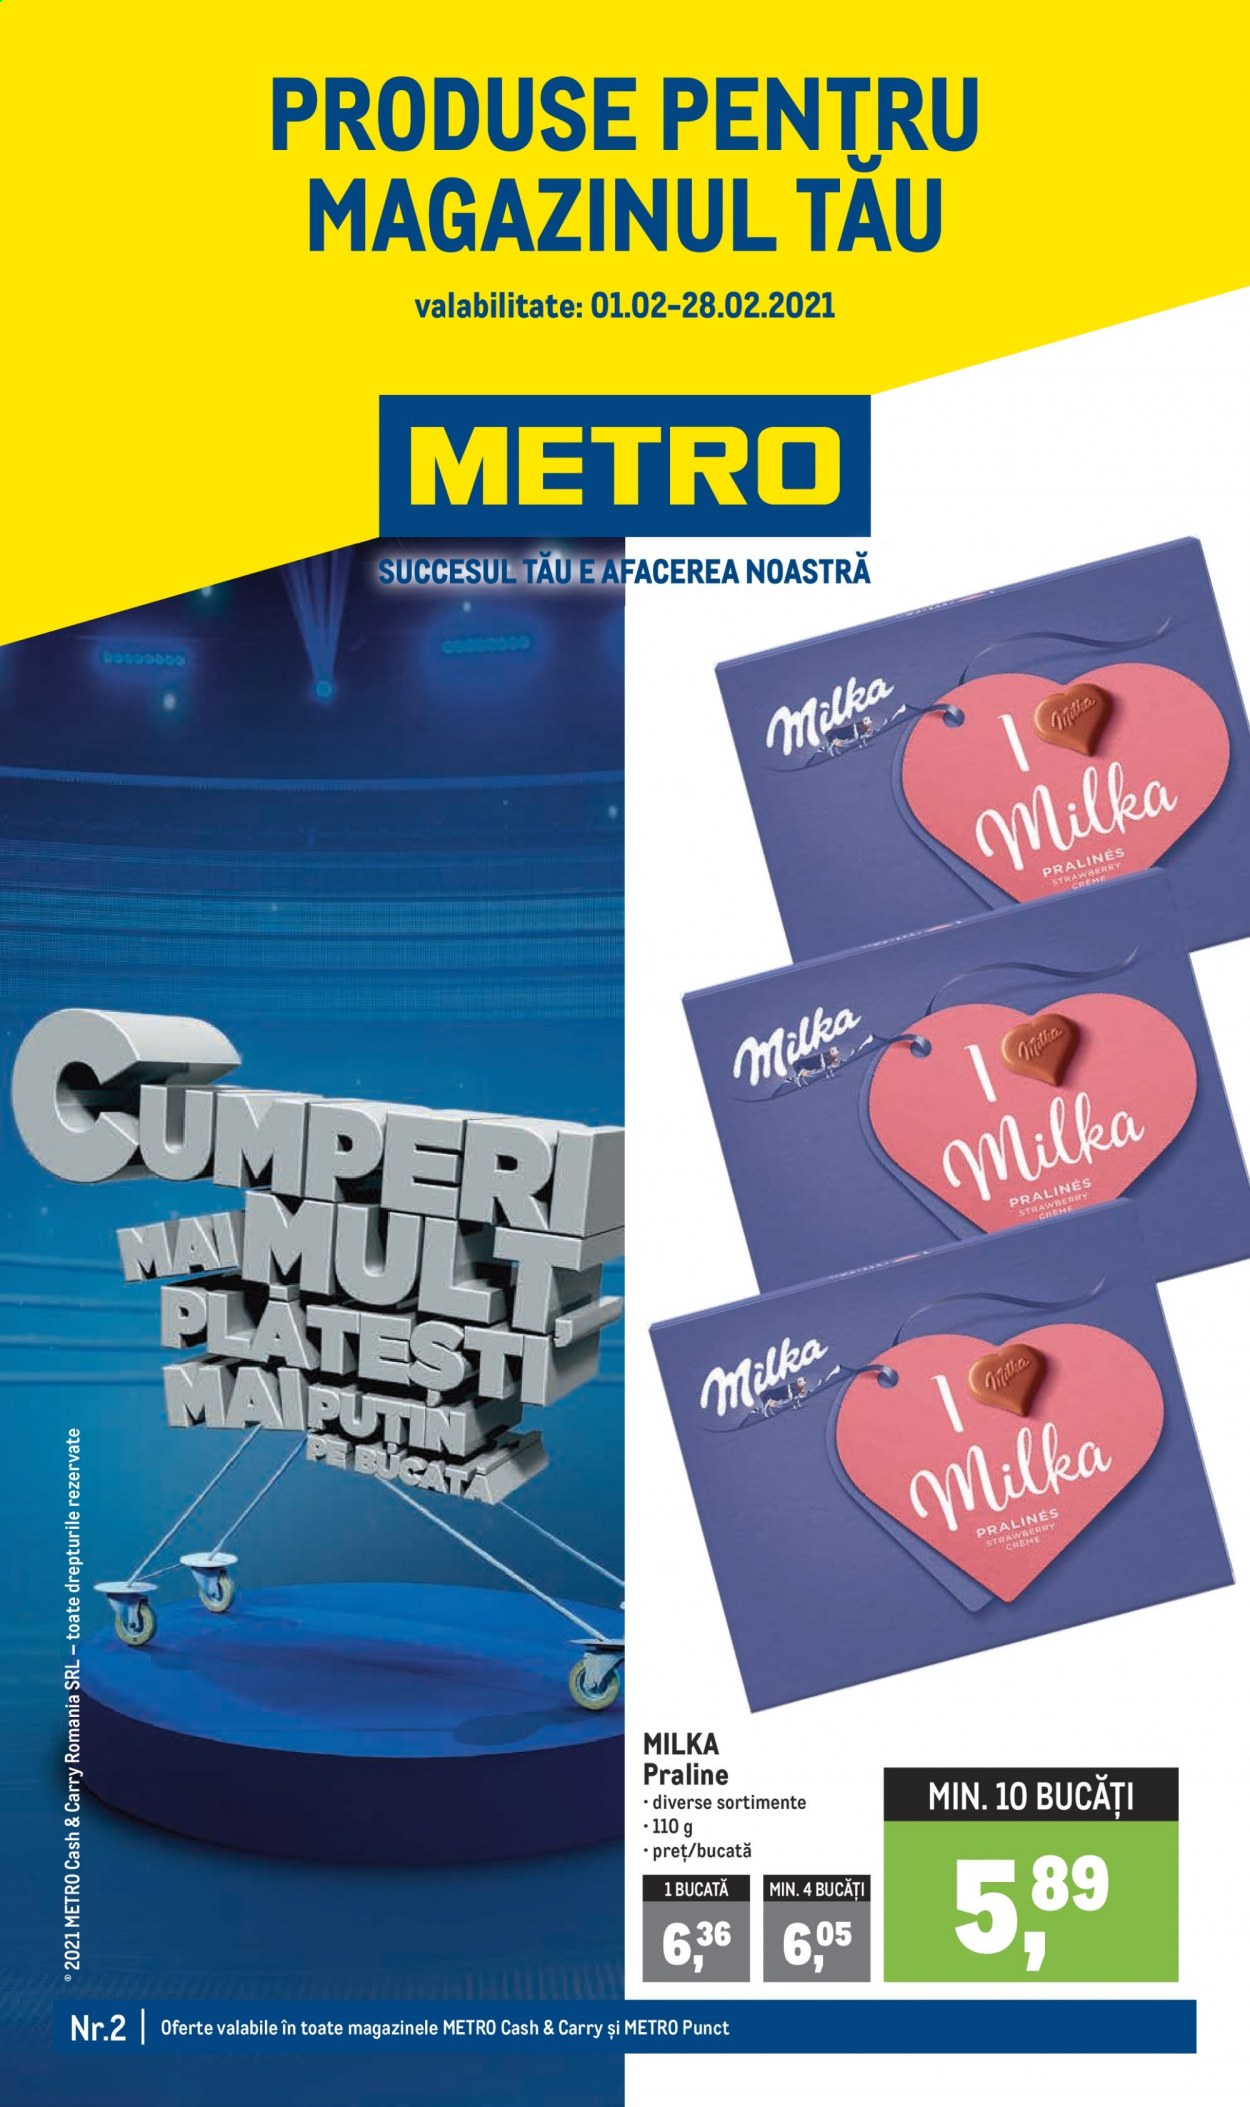 thumbnail - Cataloage Metro - 01.02.2021 - 28.02.2021 - Produse în vânzare - Milka, praline. Pagina 1.